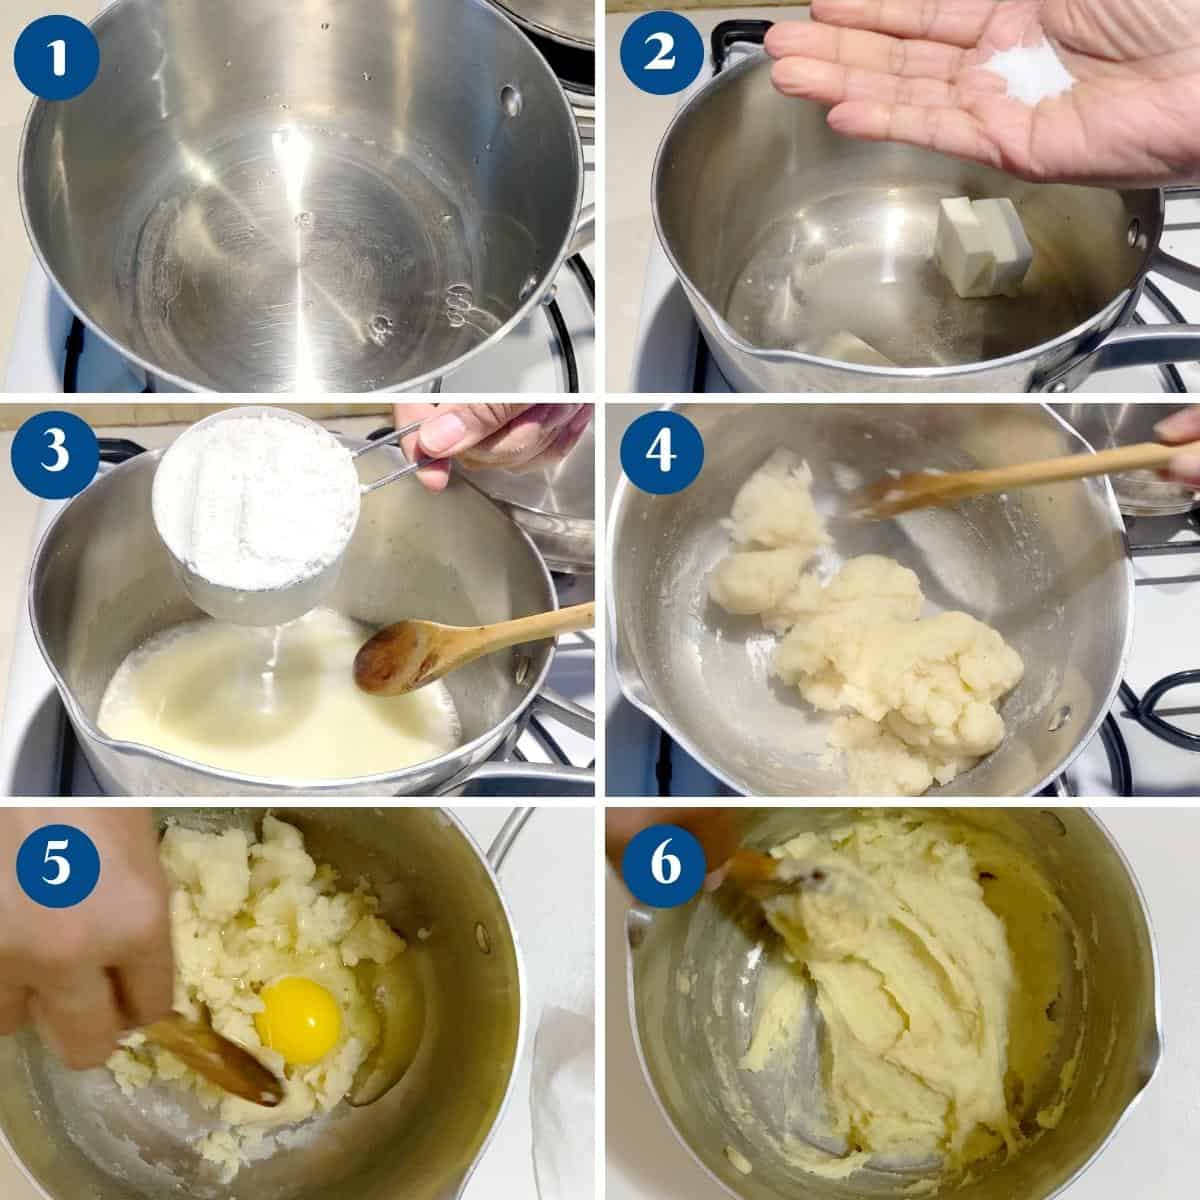 Progress pictures making the churro dough.